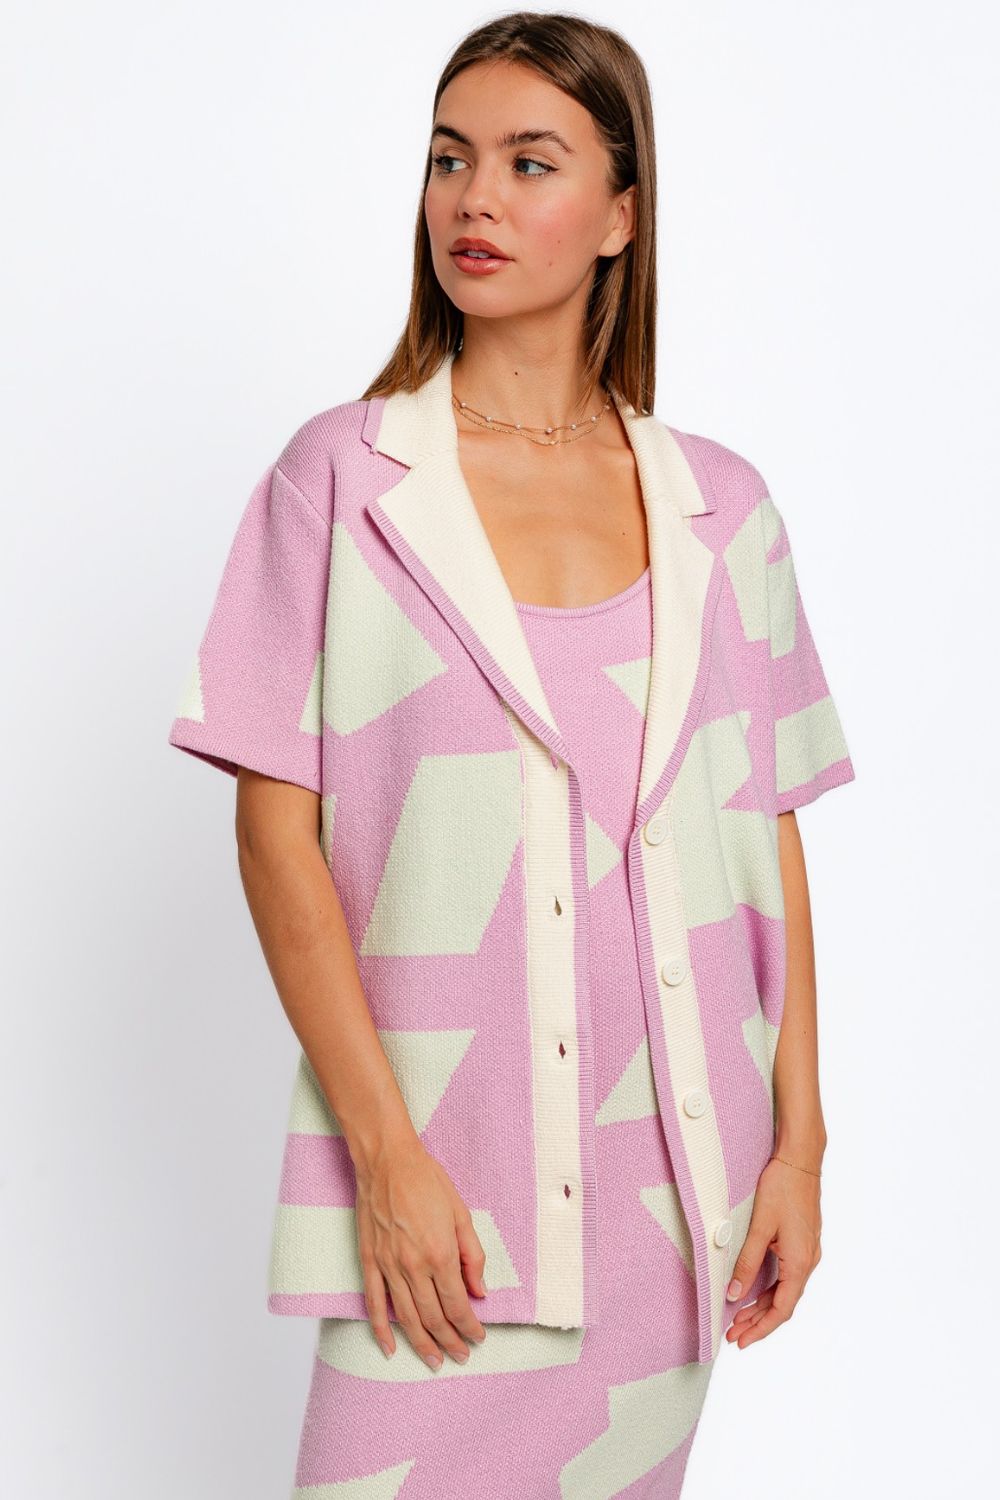 TEEK - Pink Mint Abstract Contrast Short Sleeve Collared Cardigan SWEATER TEEK Trend XS  